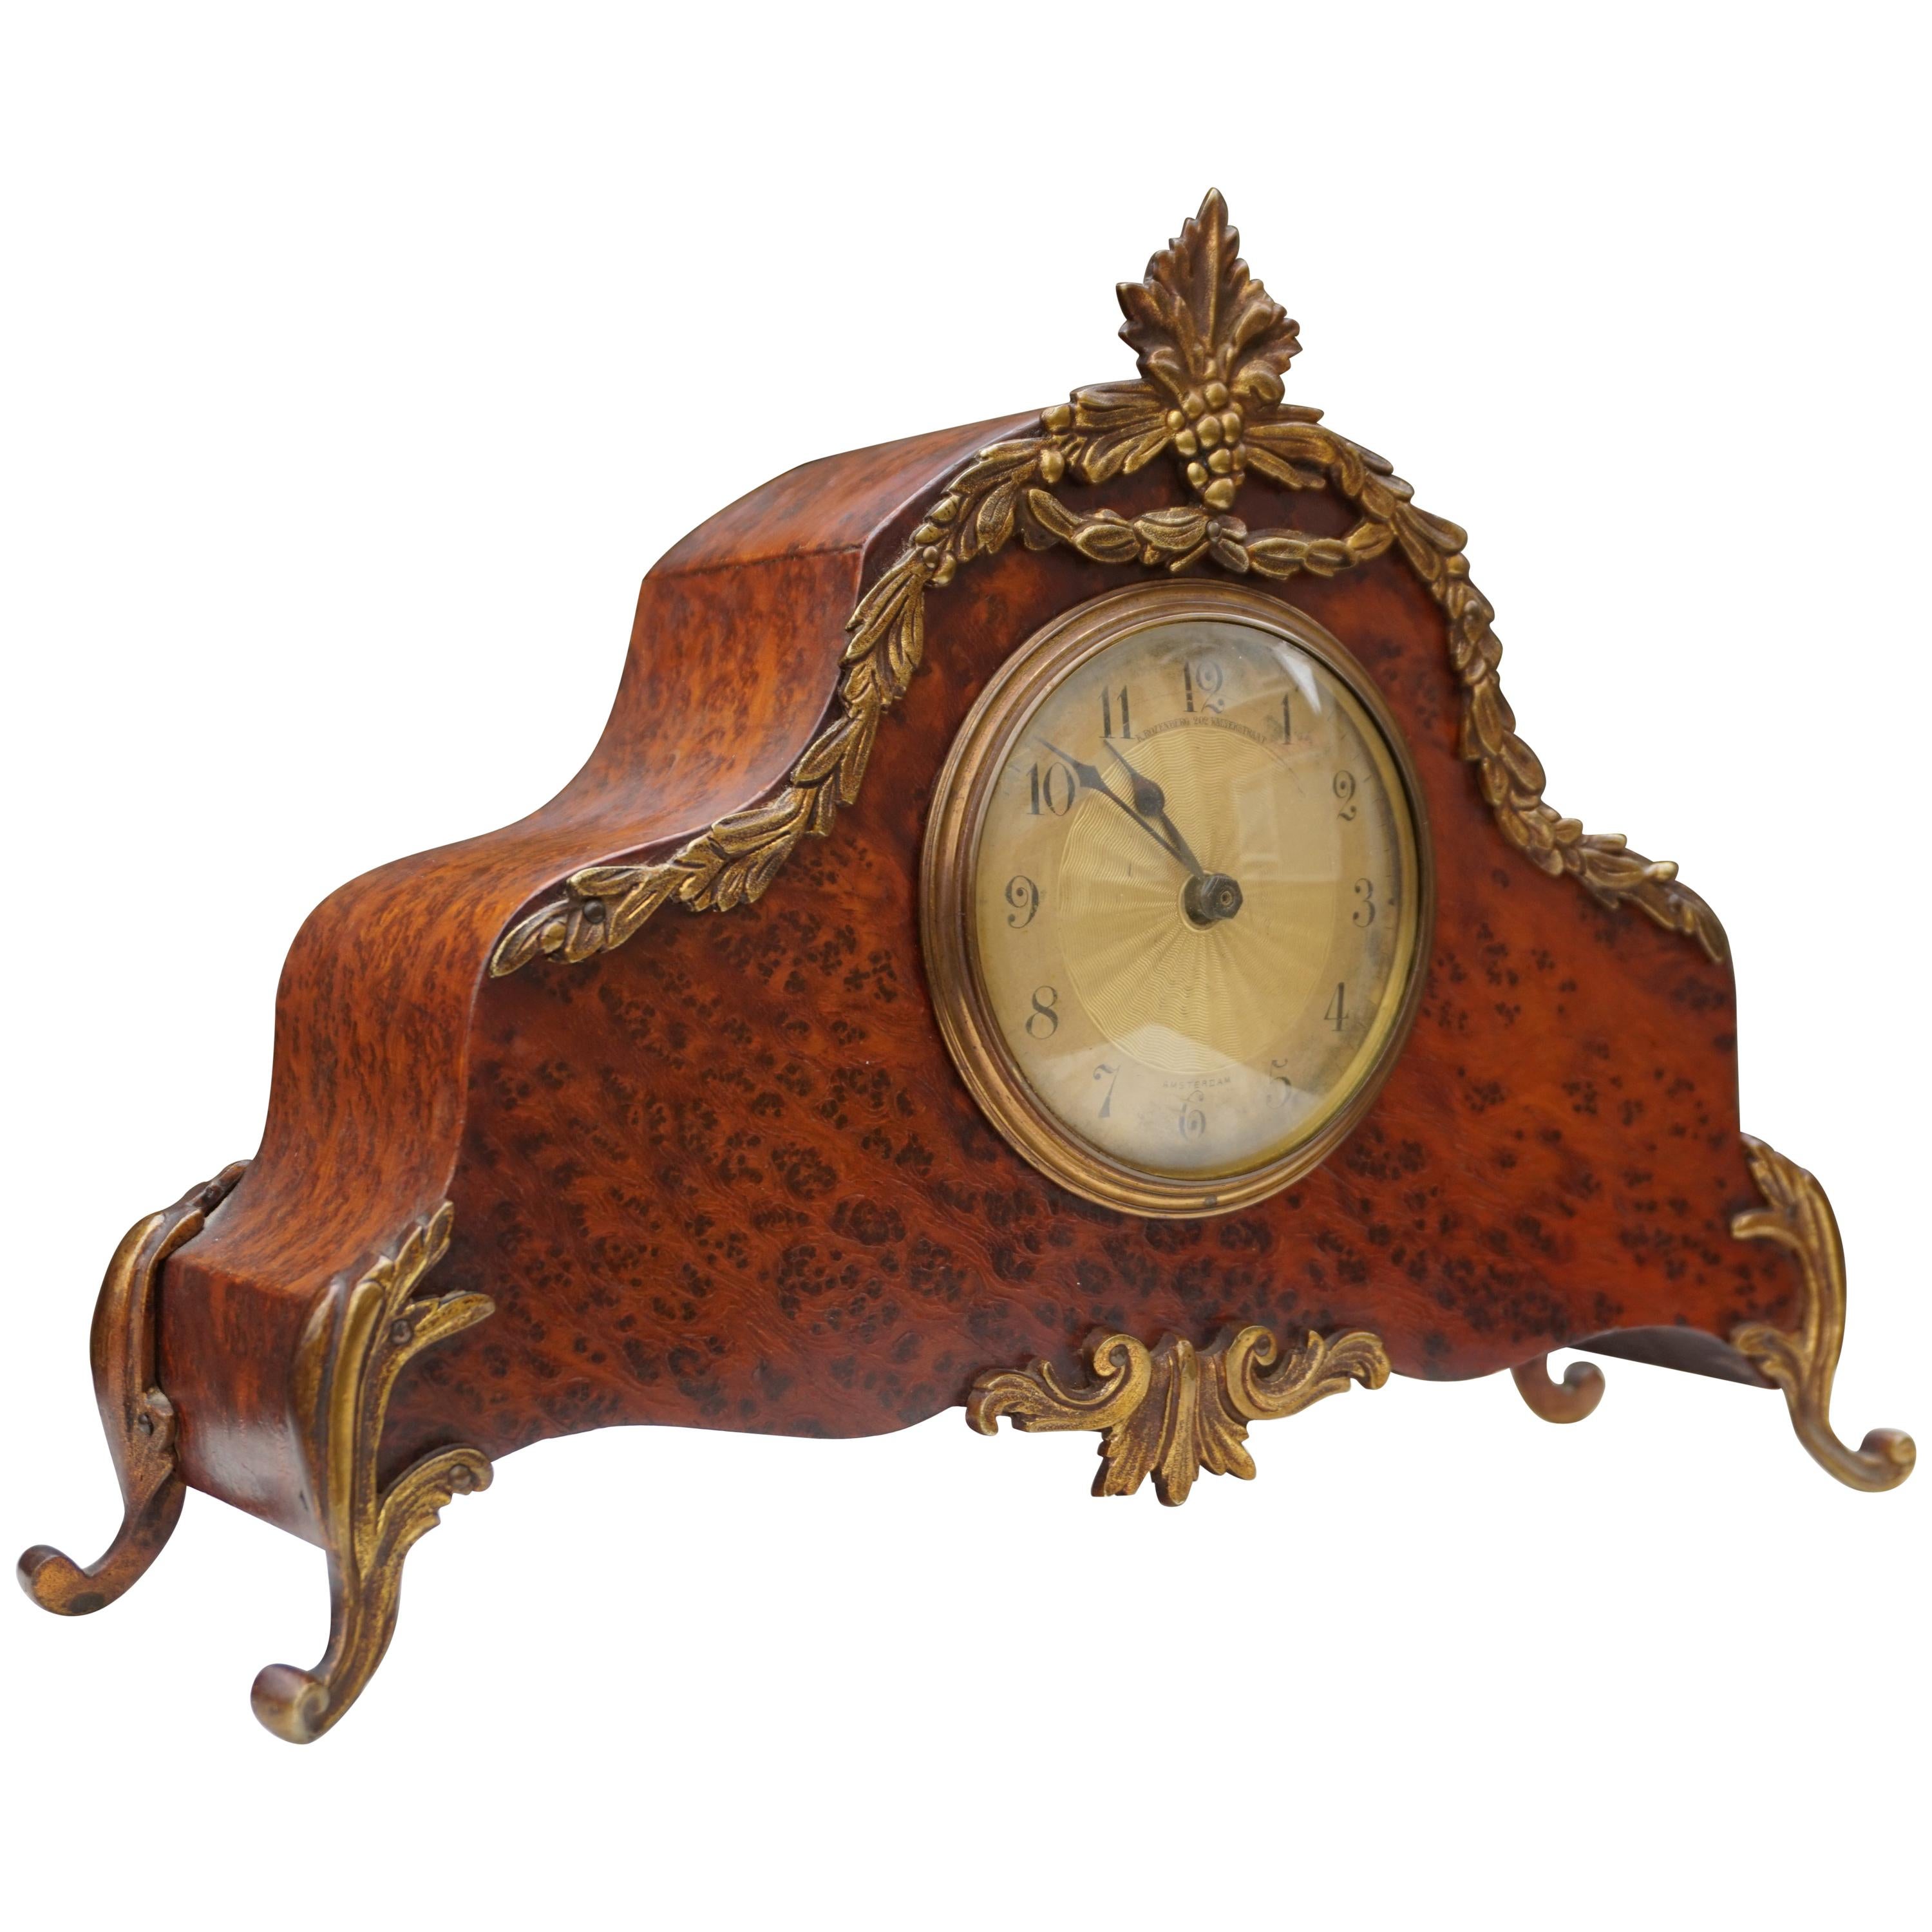 Stunning Burl Walnut Table or Mantel Clock with Stylish Bronze Feet & Ornaments